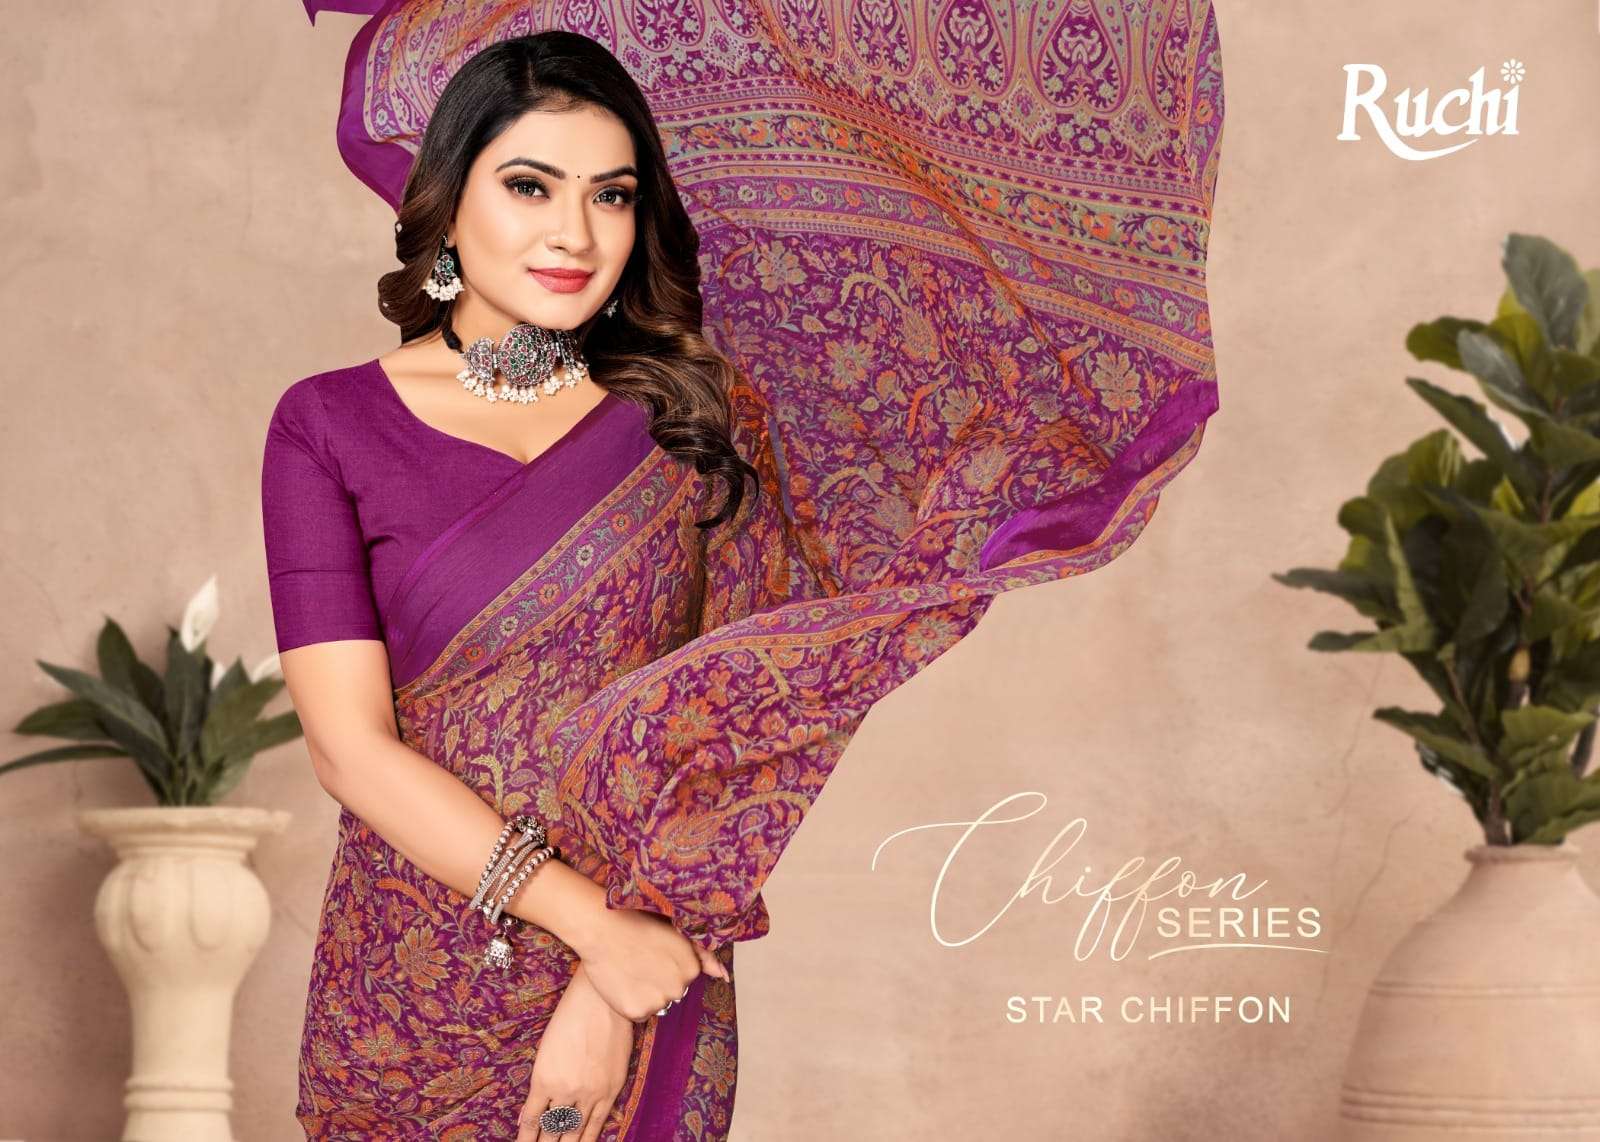 Ruchi Saree Star Chiffon 142nd Edition Exclusive Chiffon Saree Suppliers